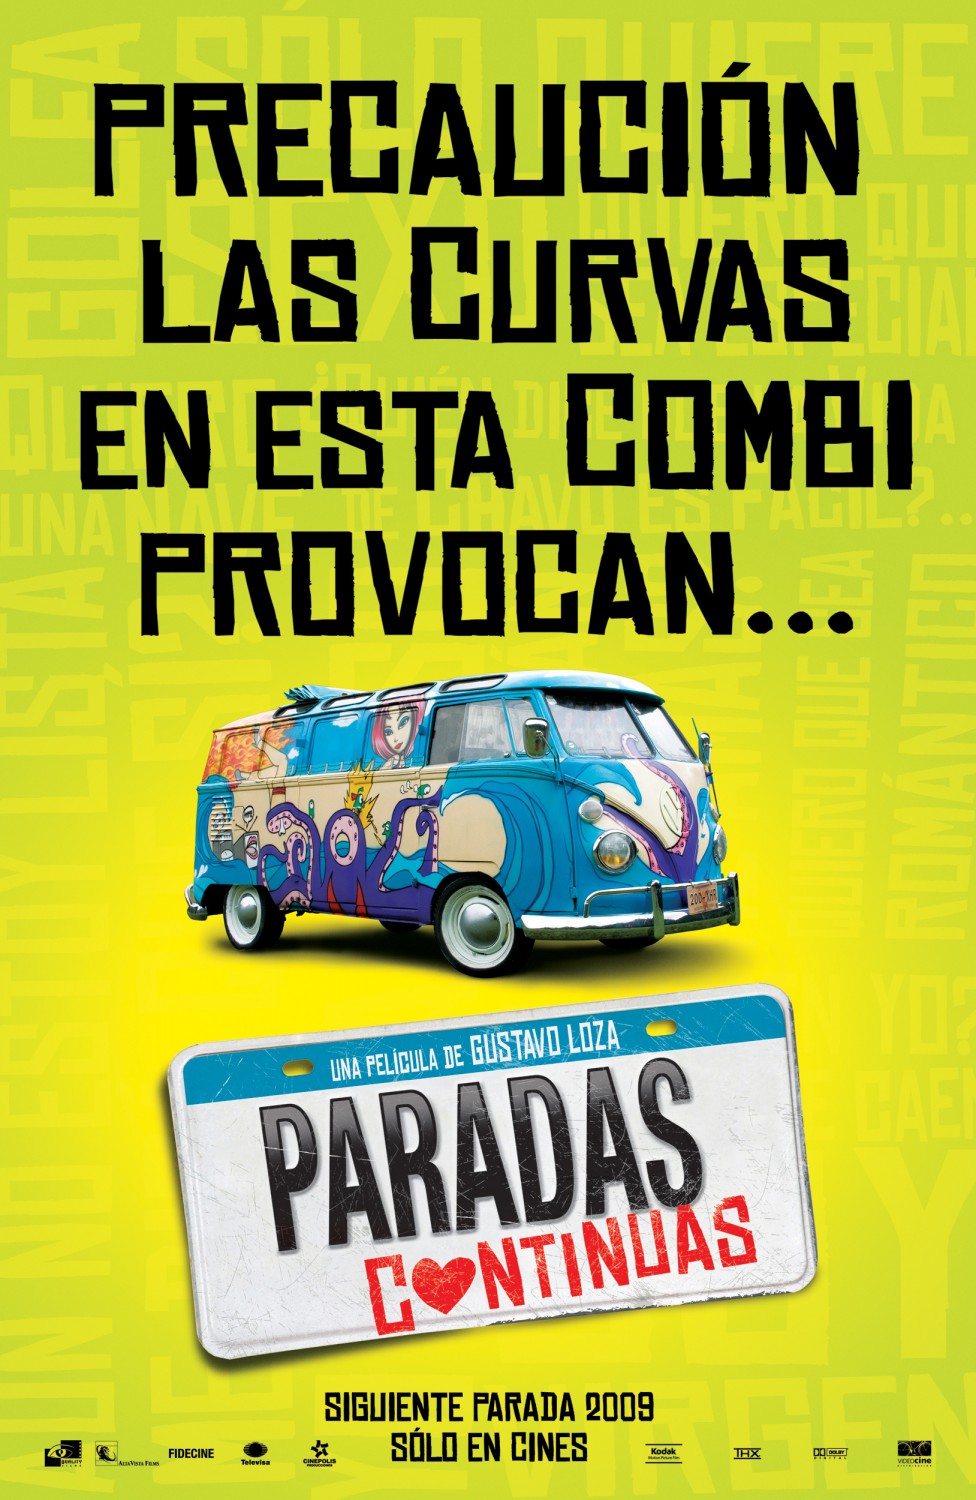 Extra Large Movie Poster Image for Paradas continuas (#5 of 5)